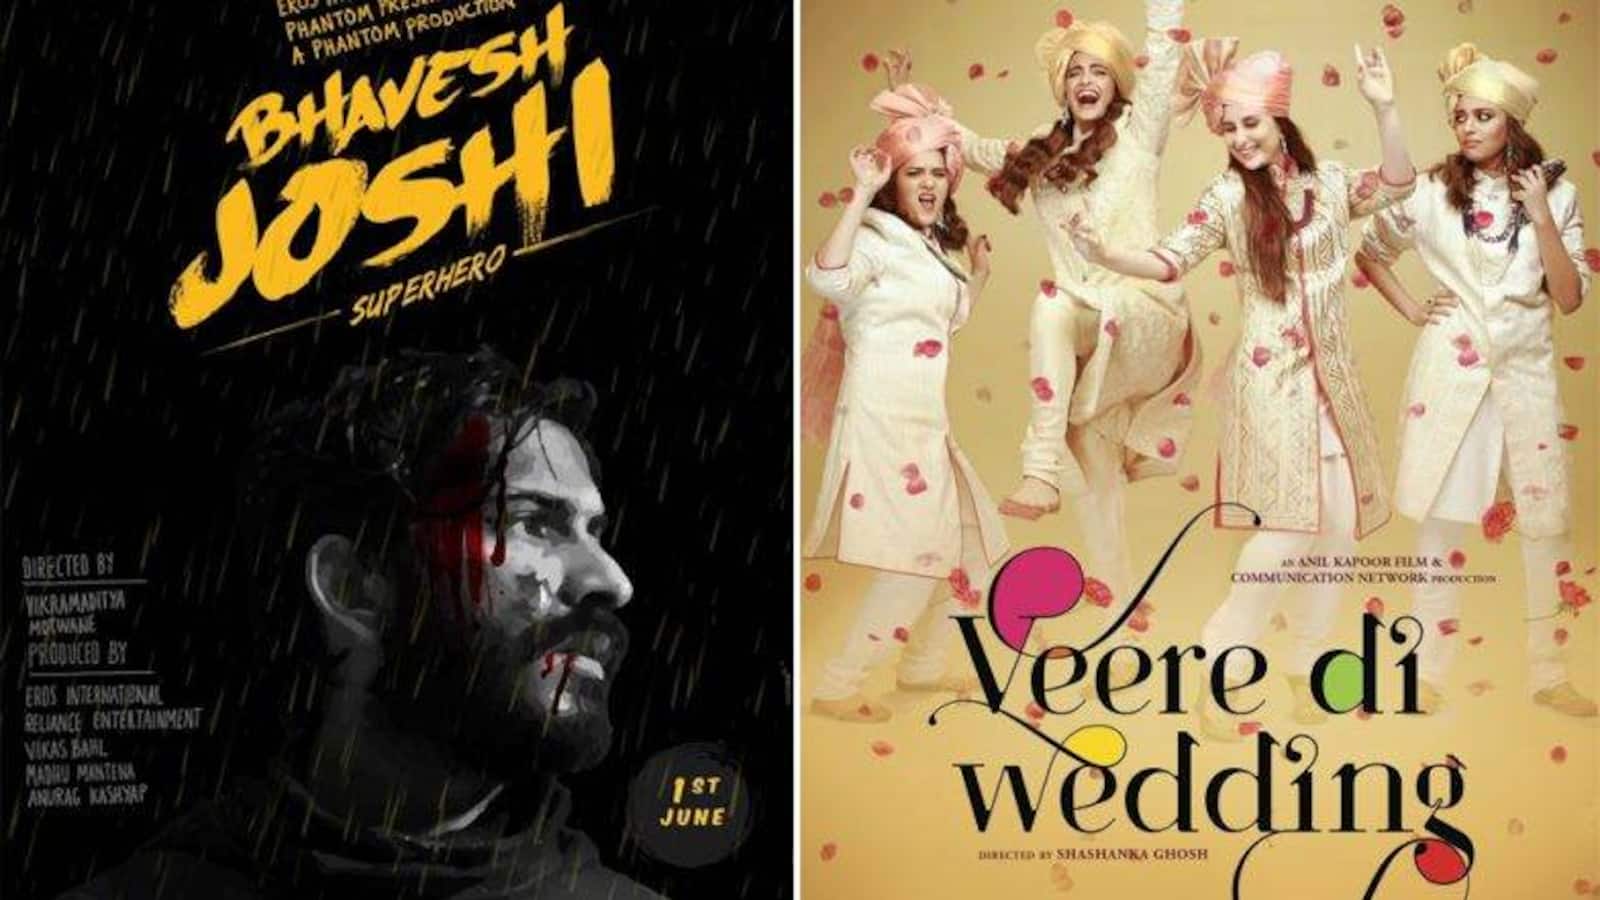 Harshvardhan Kapoor has a rather logical reasoning behind Bhavesh Joshi Superhero clashing with Sonam Kapoor's Veere Di Wedding